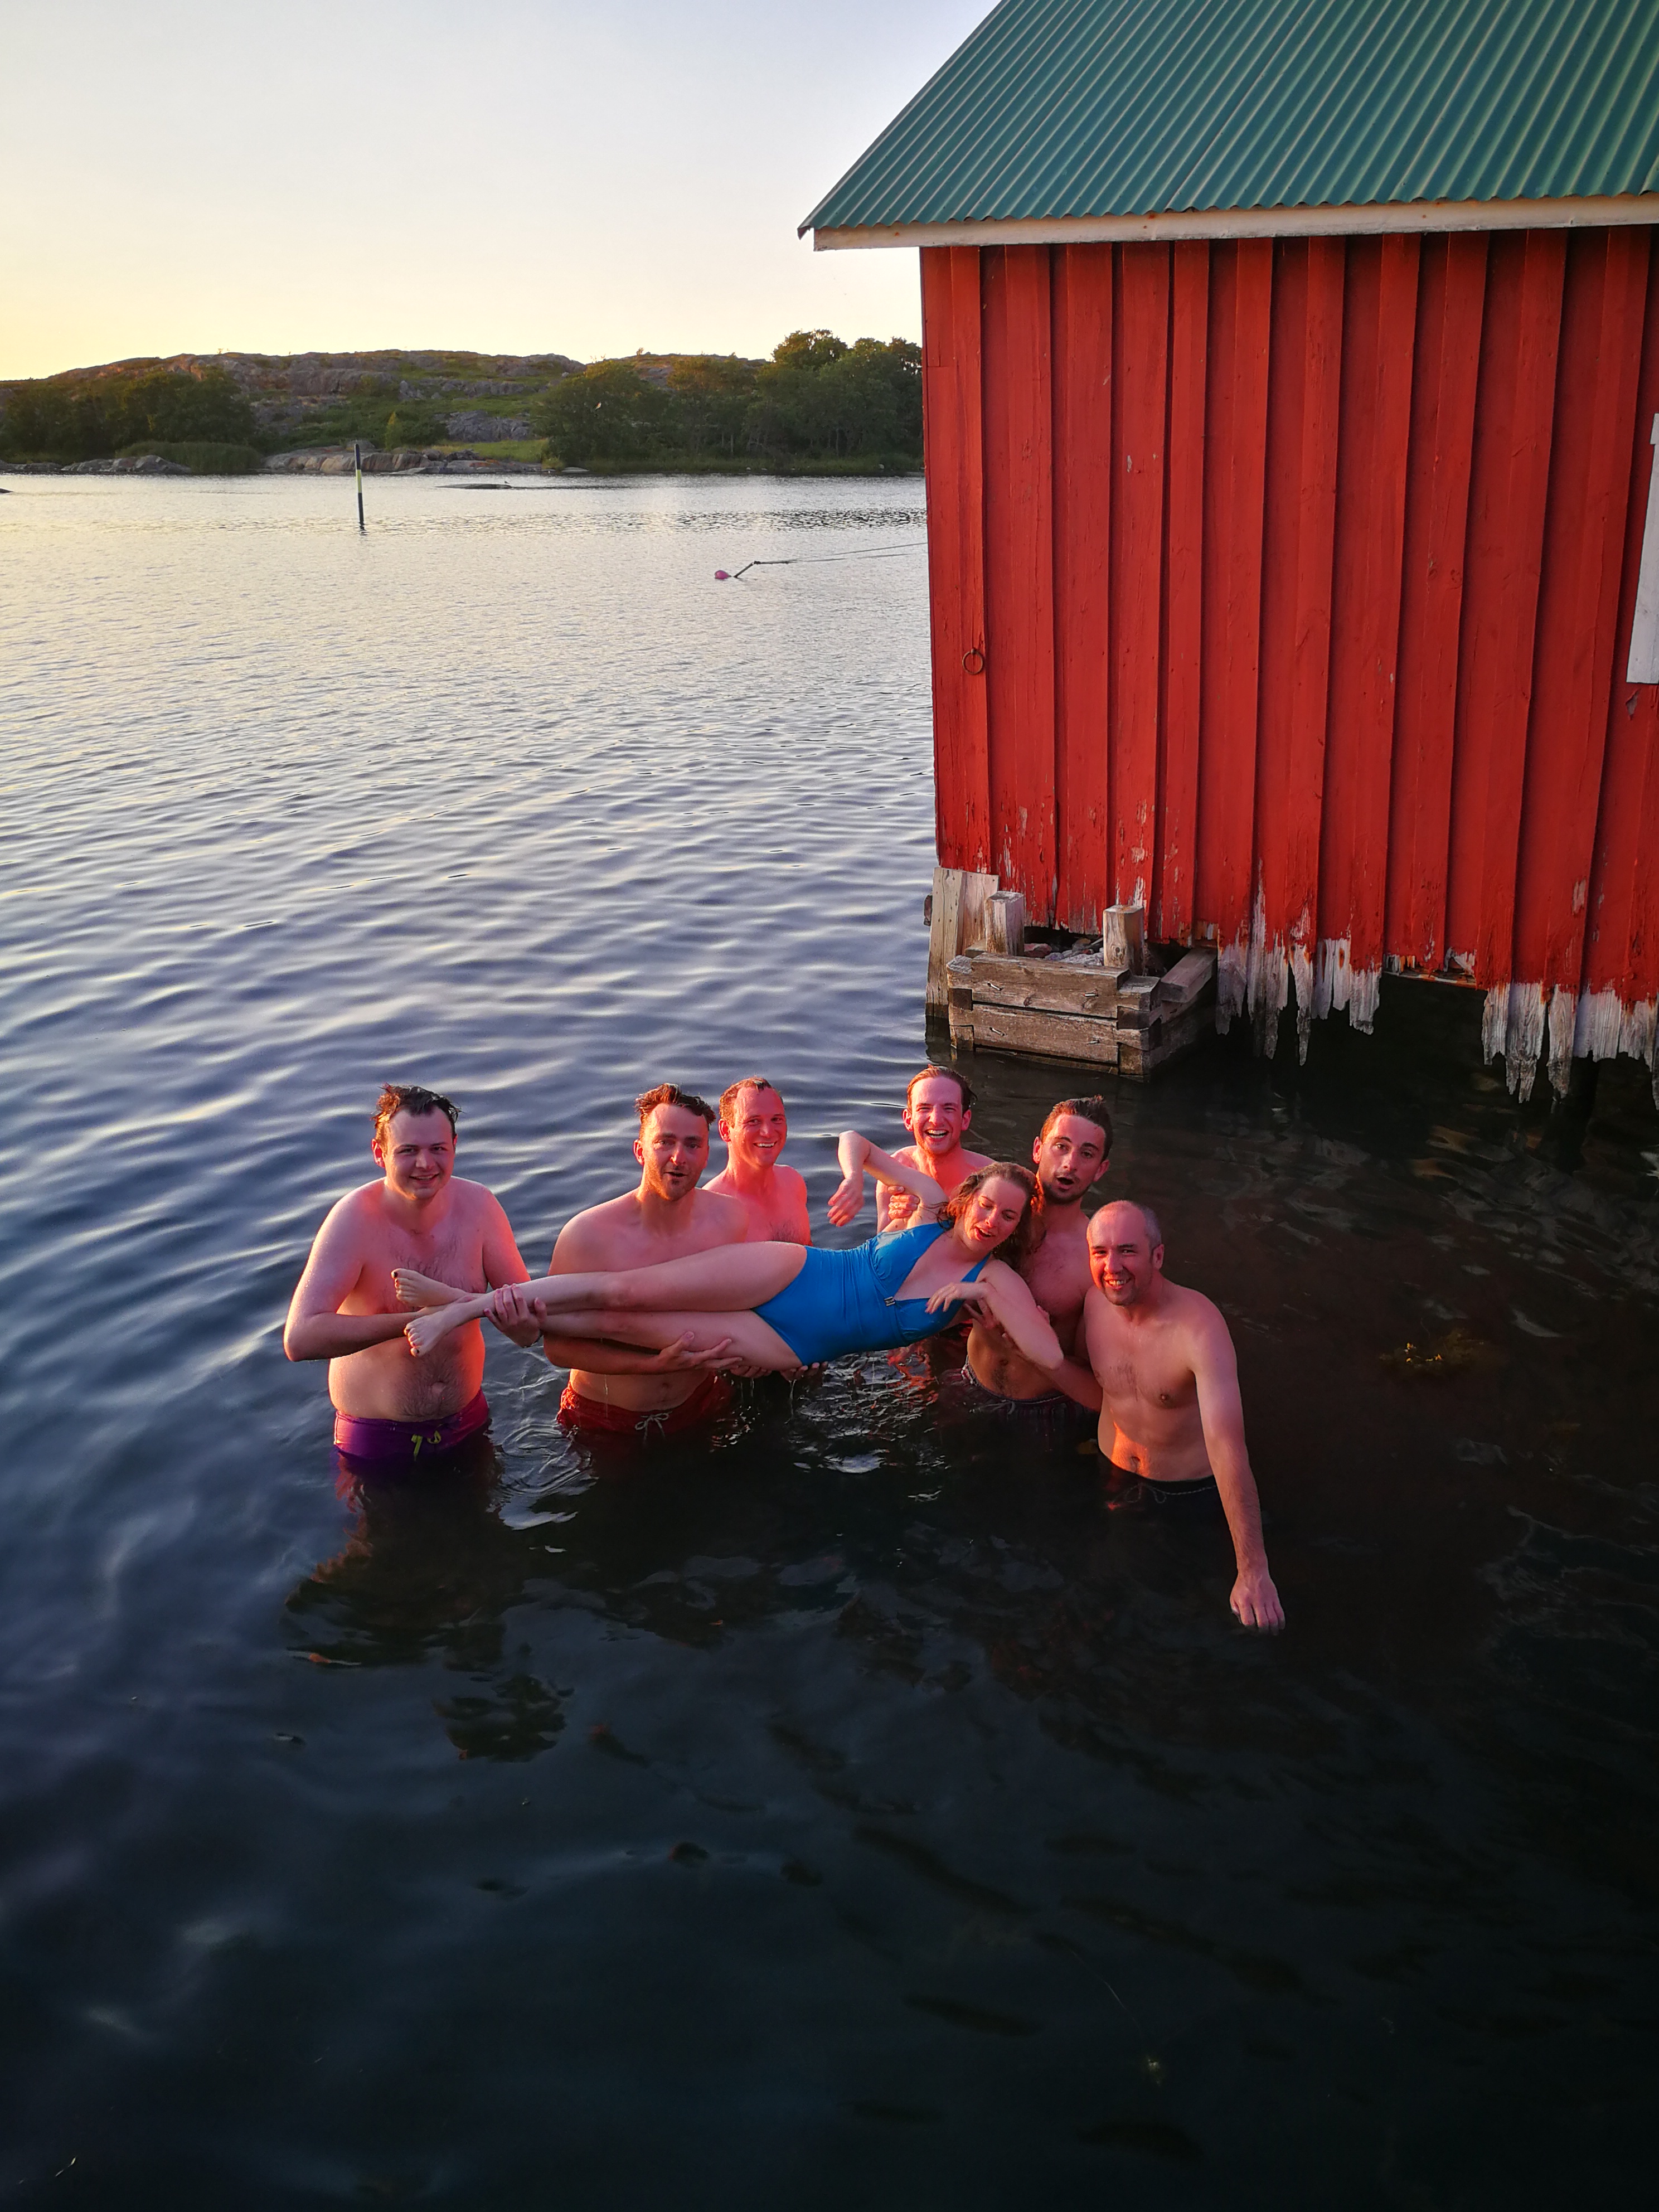 The Finnish sauna experience